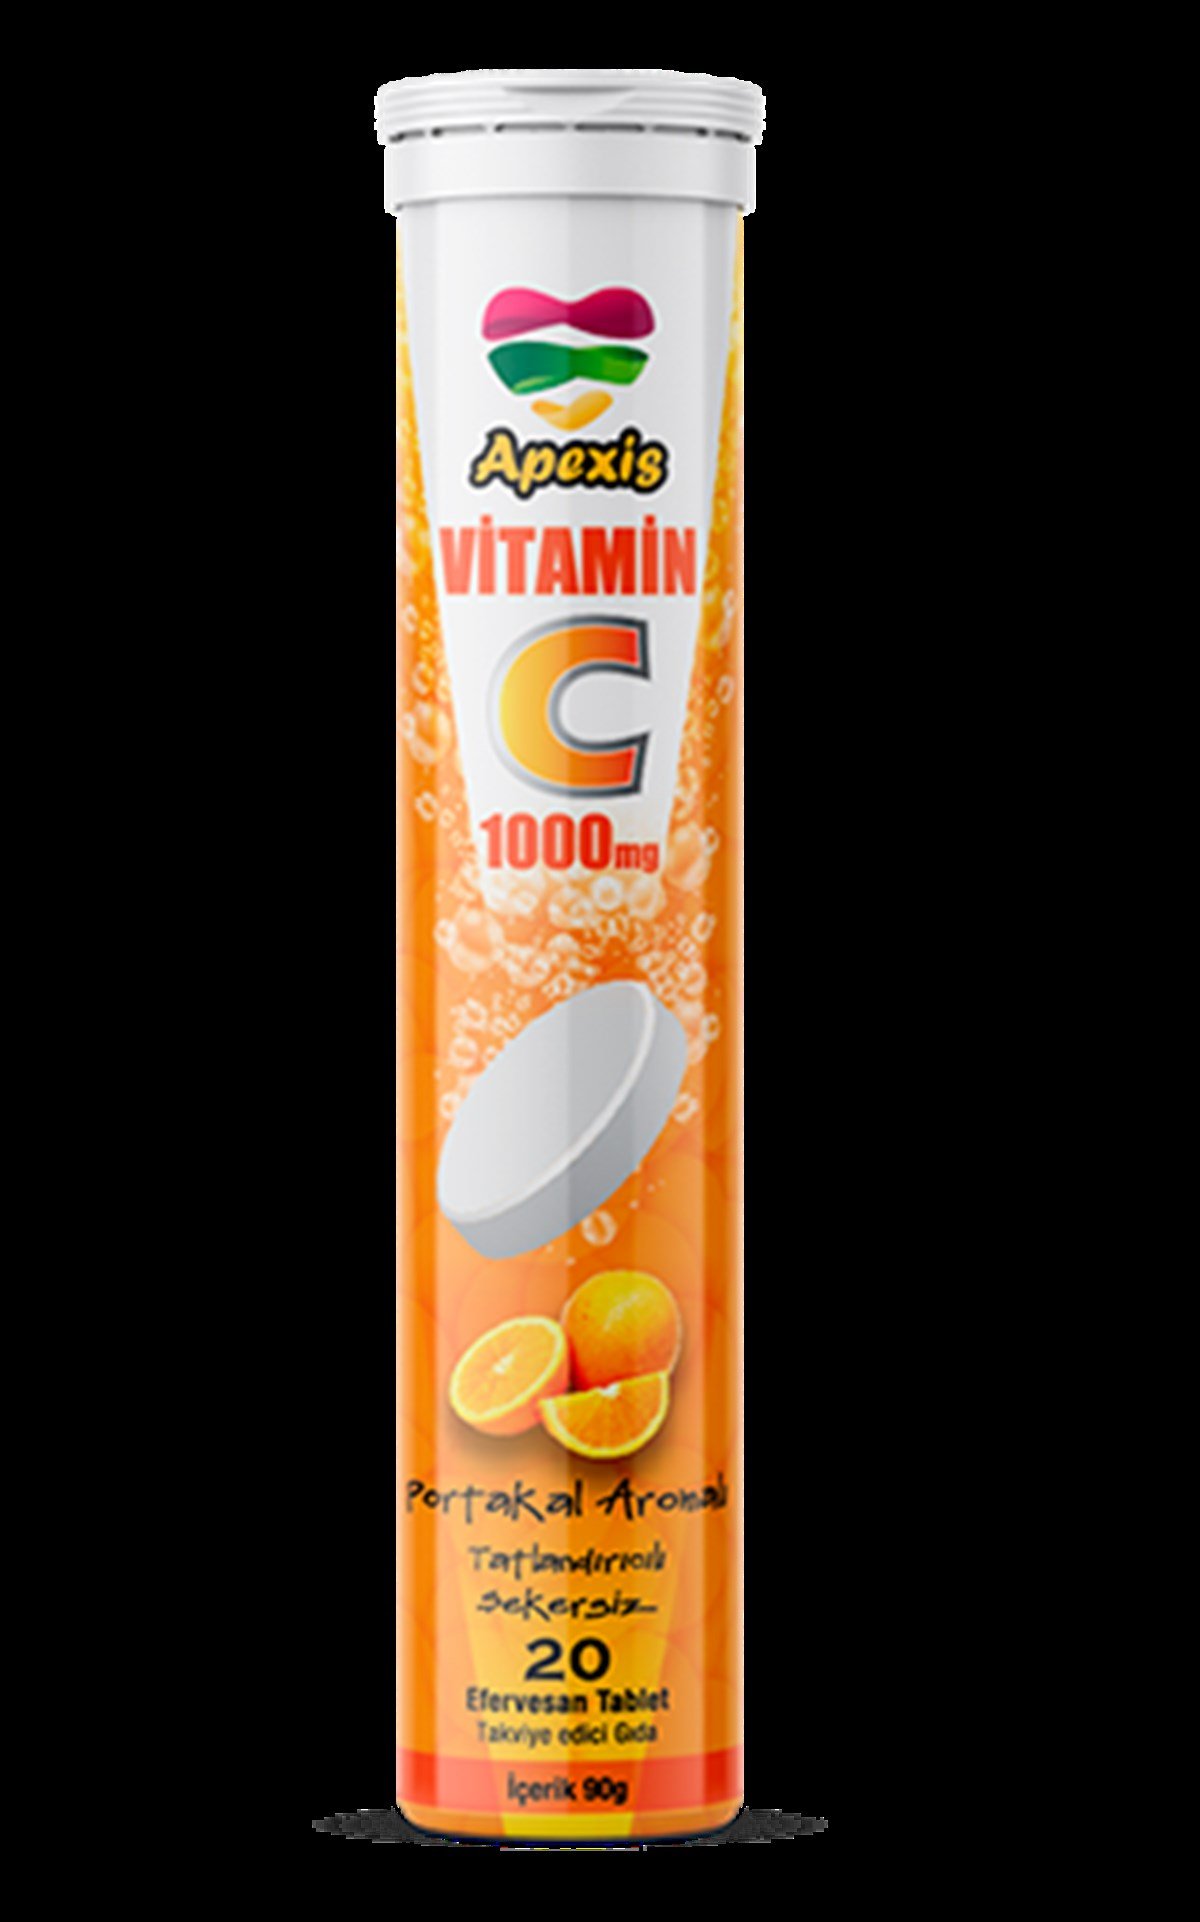 Apexis Vitamin C 1000 mg Efervesan Tablet -LeylekKapıda.com